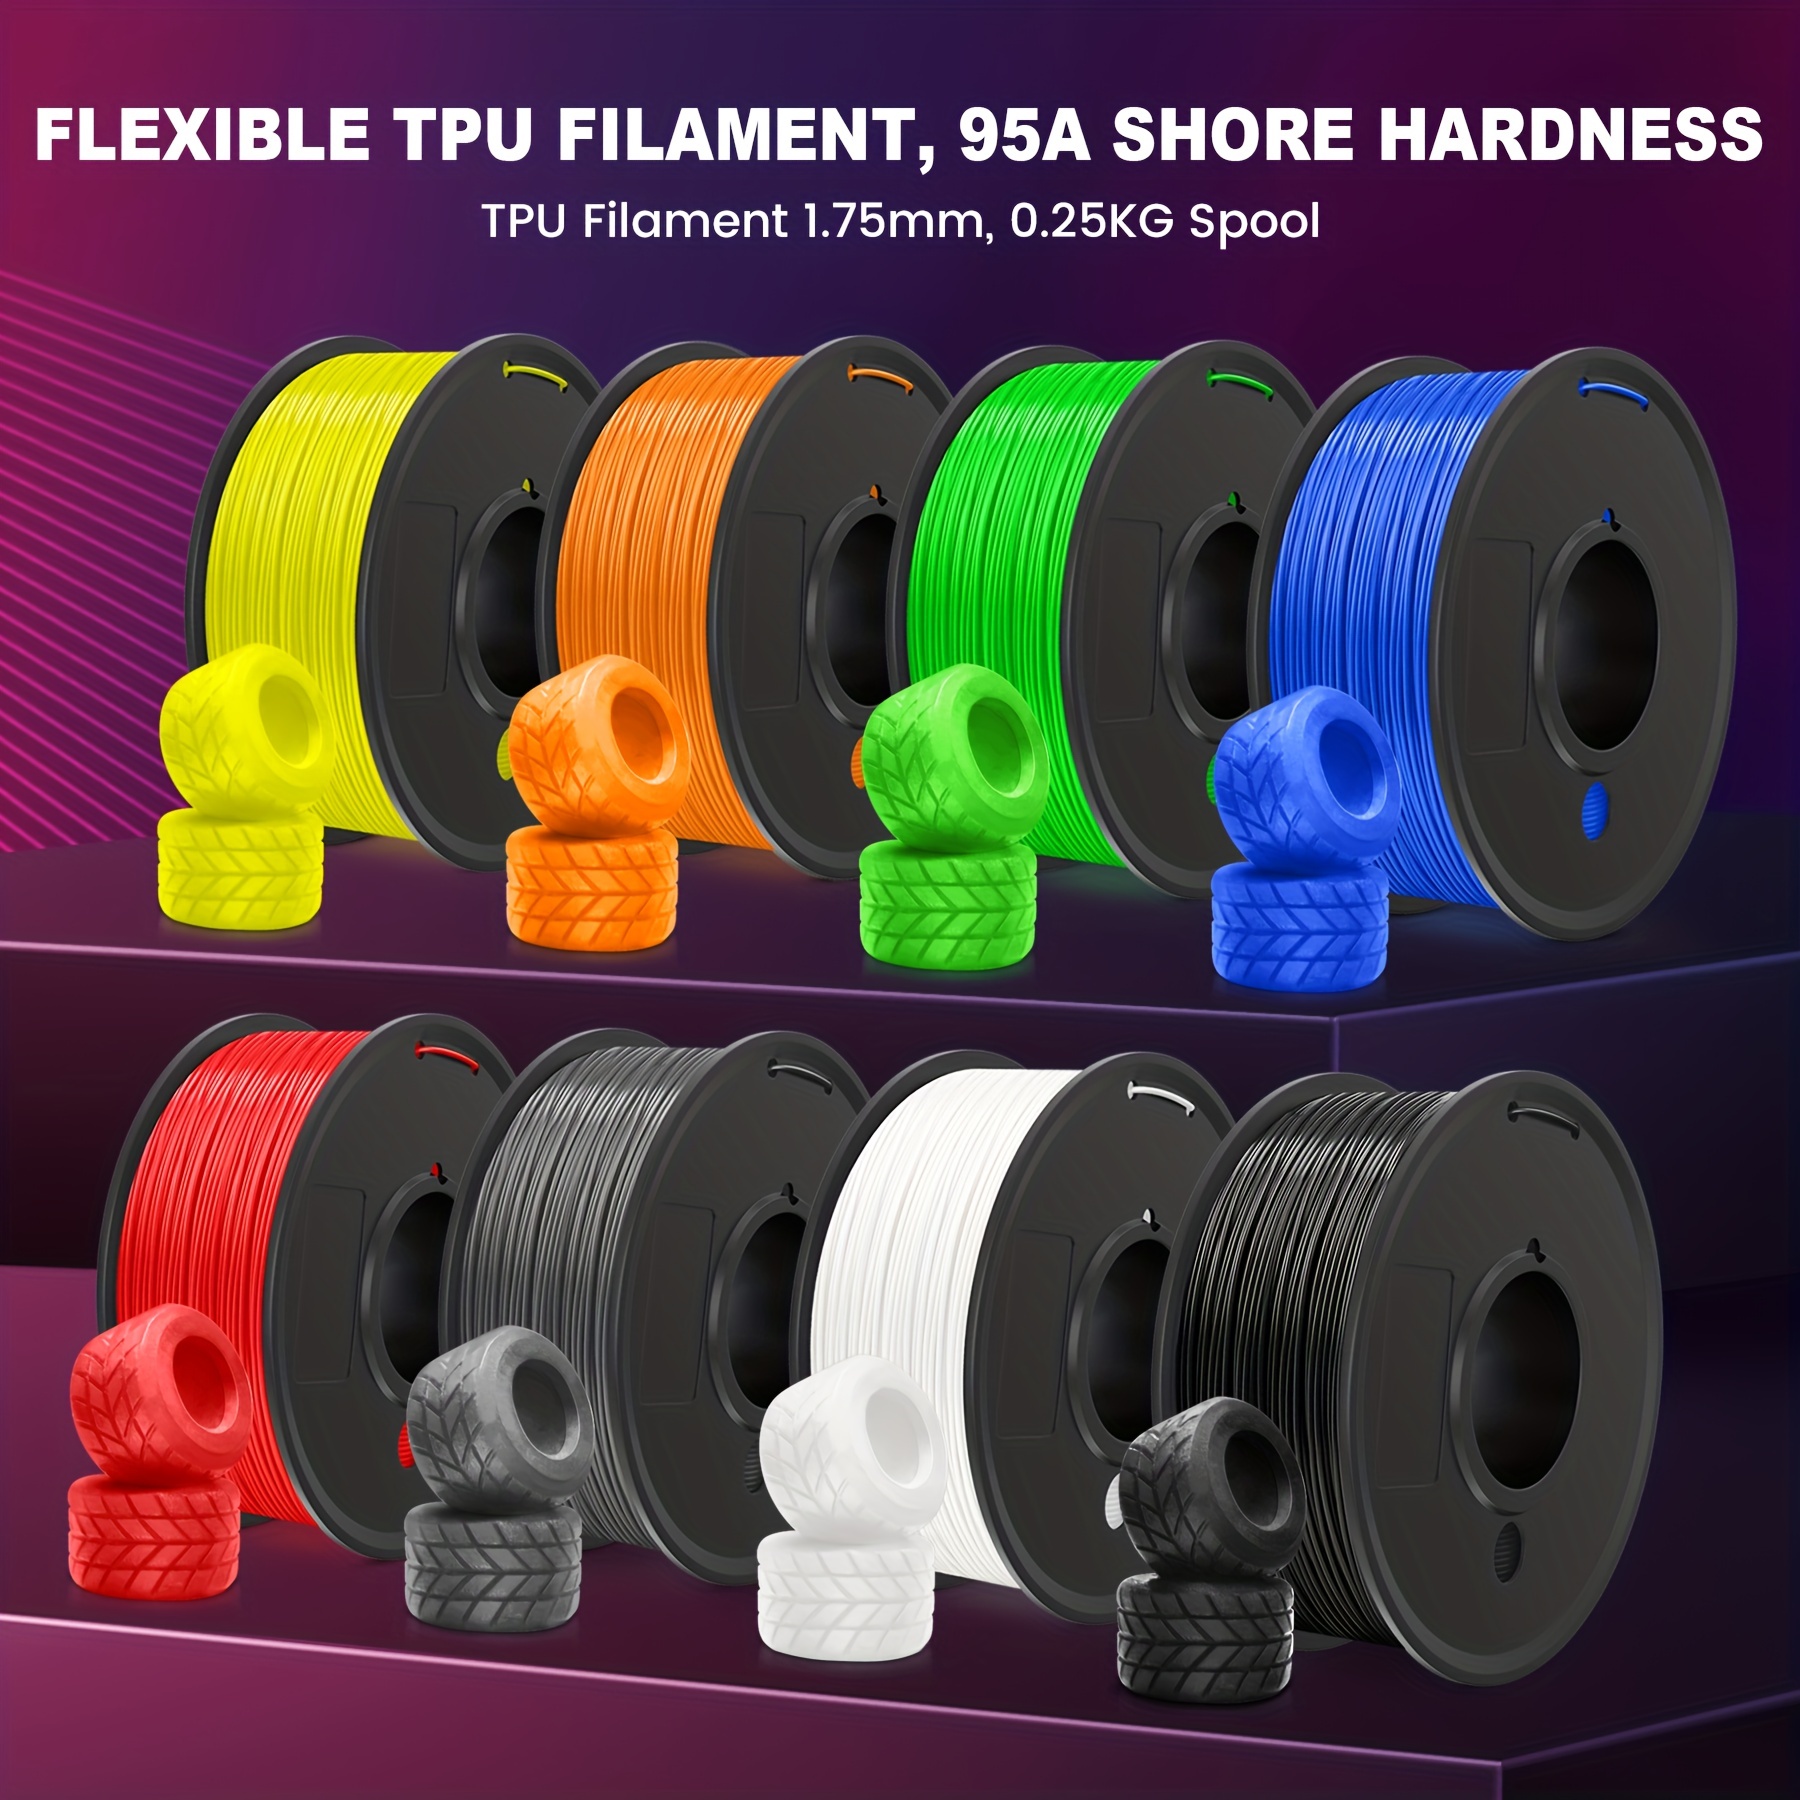 GIANTARM TPU Filament 1.75mm Flexible Soft 3D Printer Consumables White,95A  1kg Spool (2.2 lbs.), Dimensional Accuracy +/- 0.05 mm